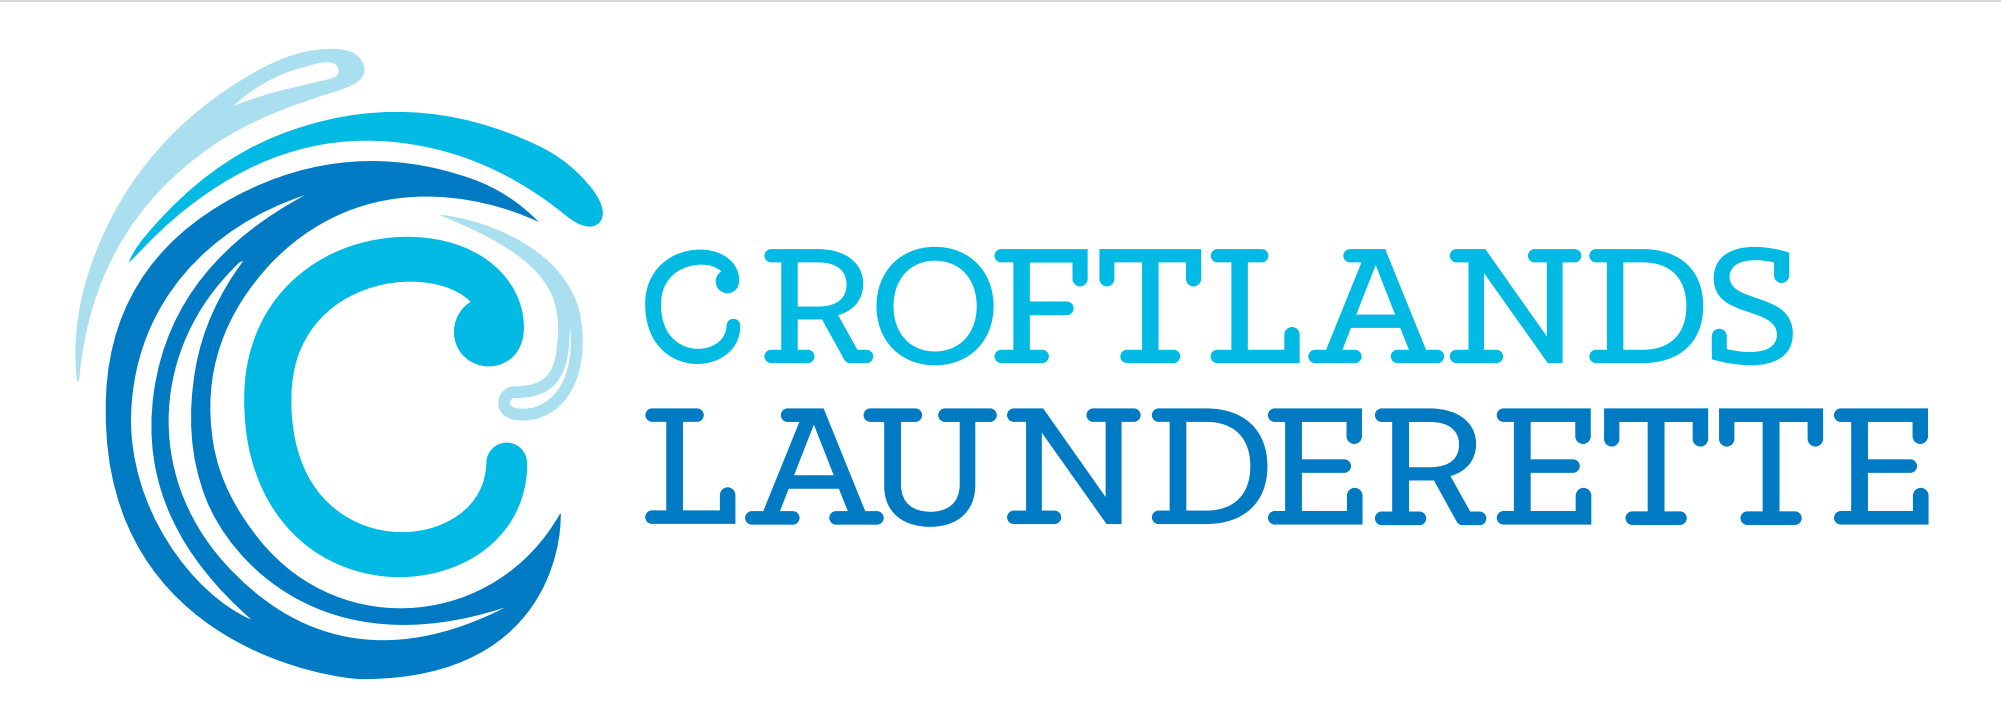 logo for Croftlands Launderette